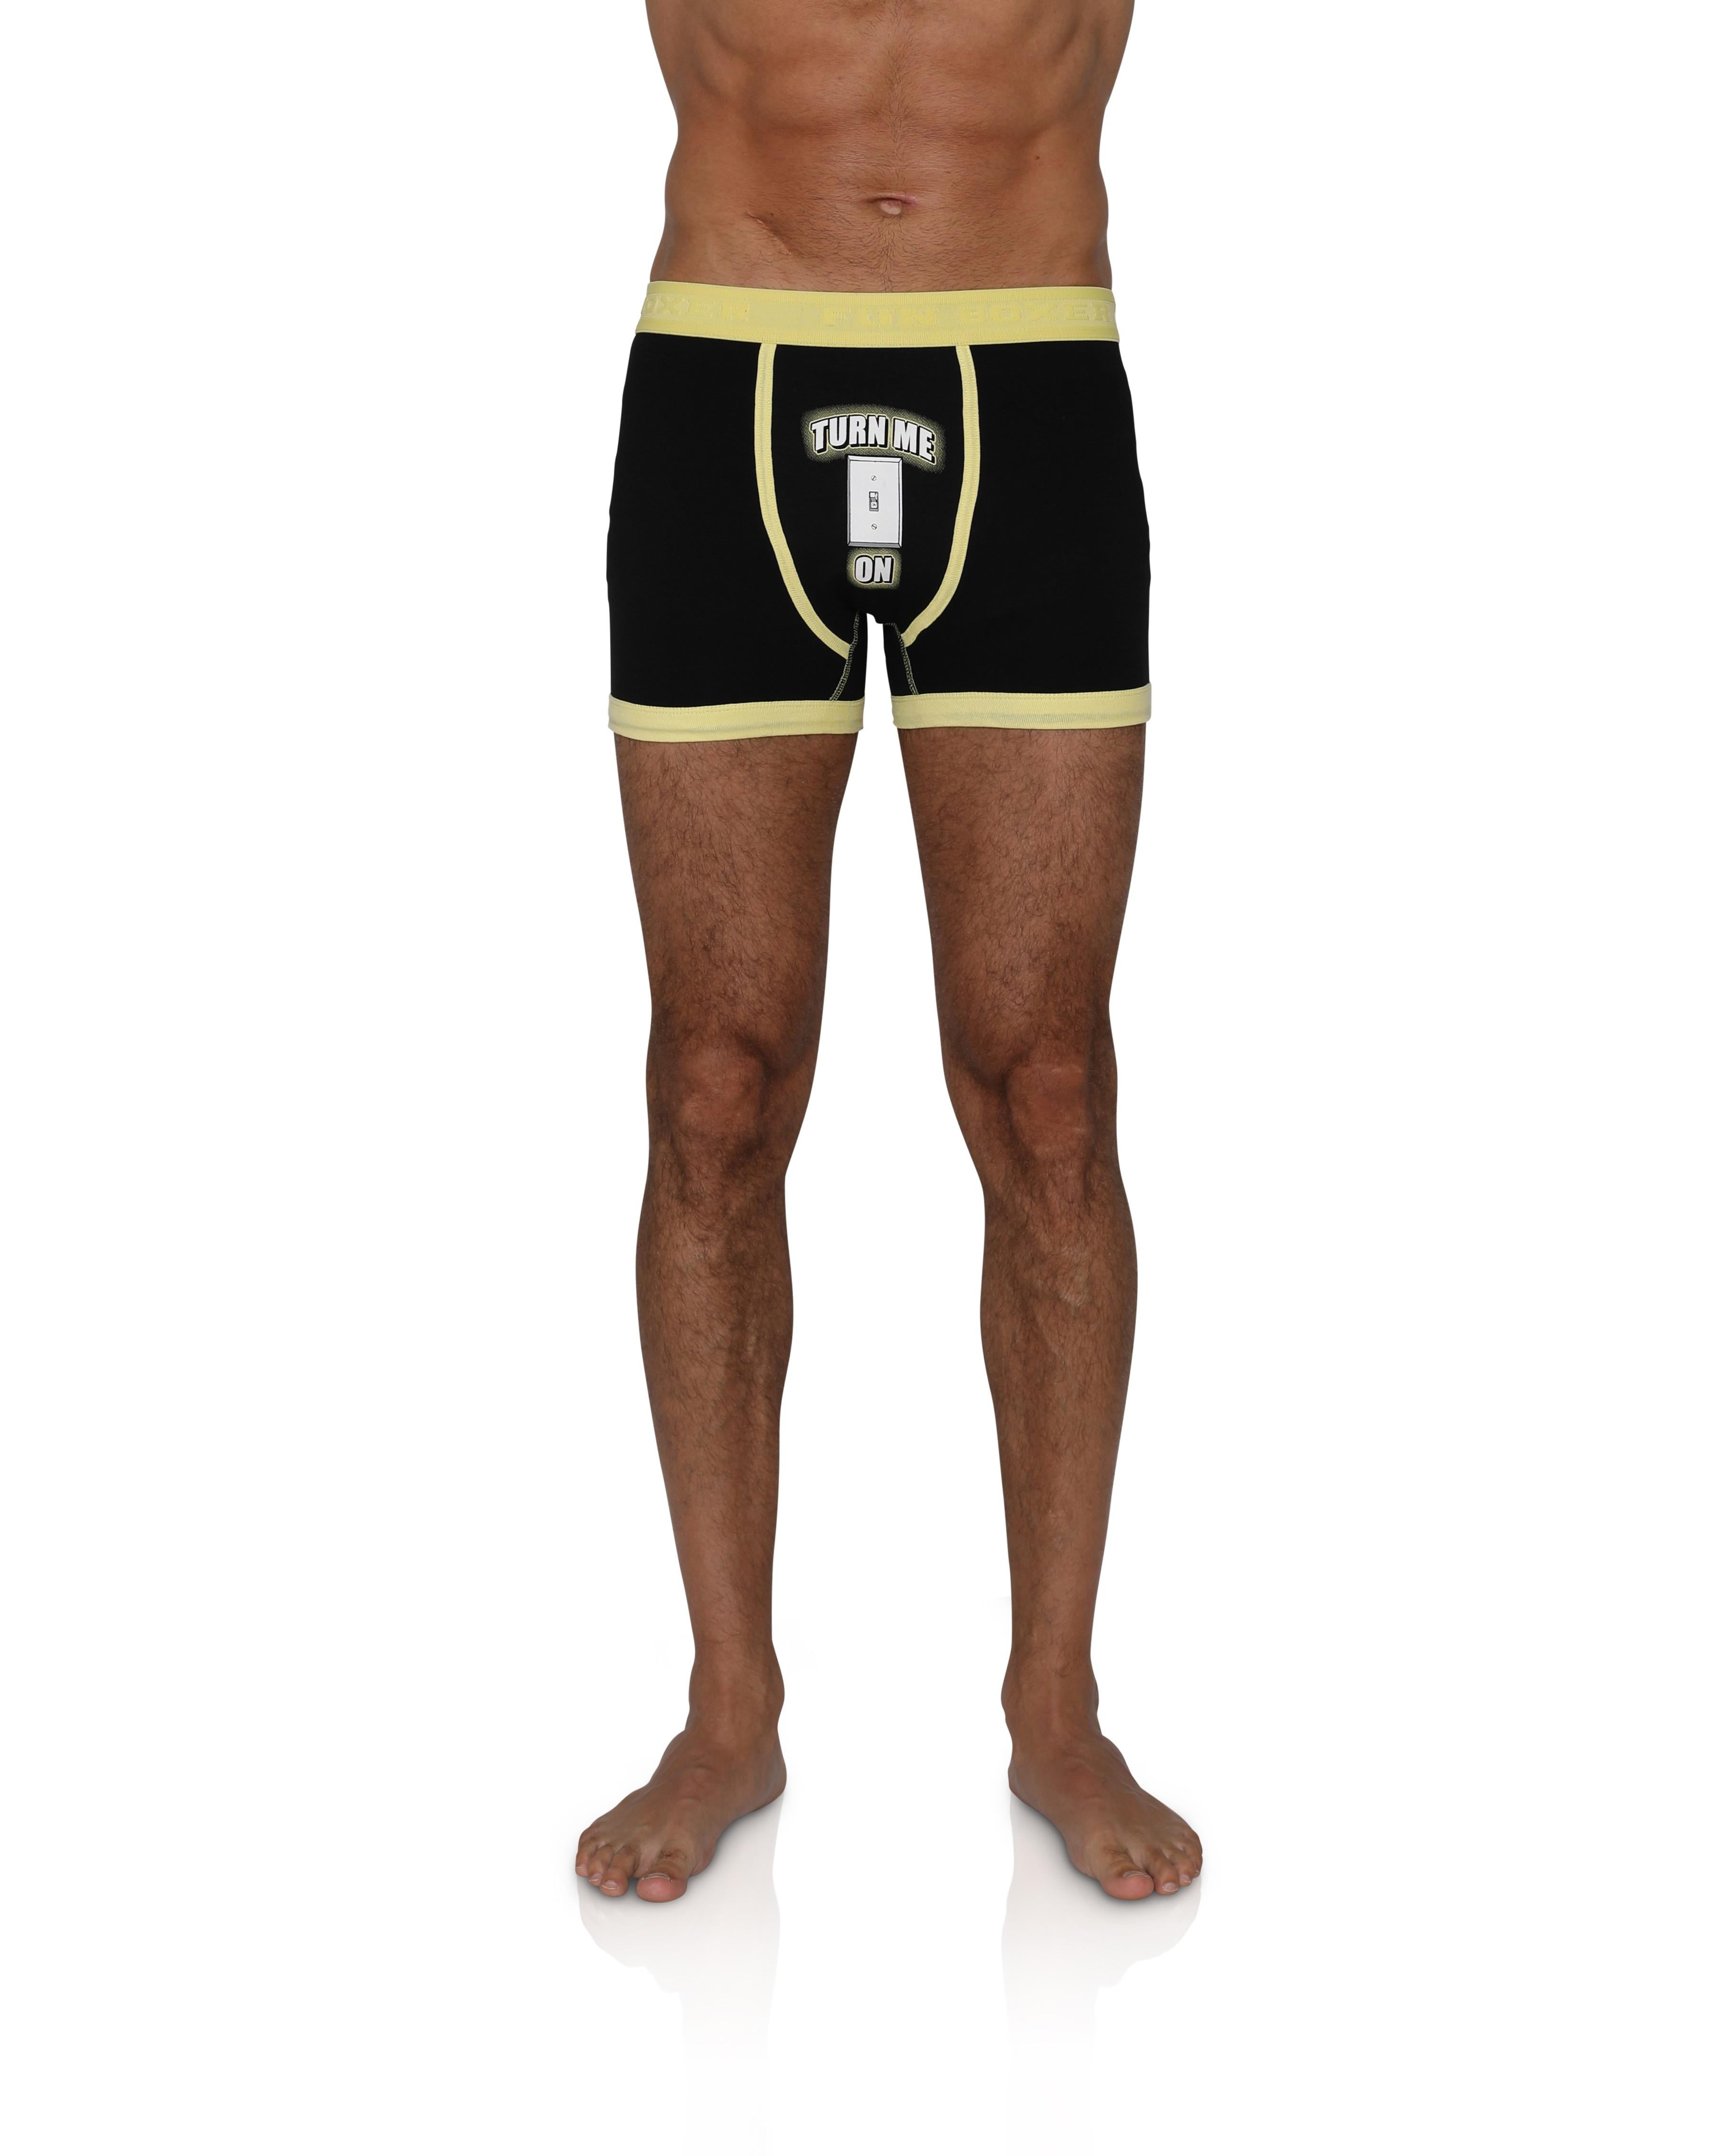 Fun Boxers - Fun Mens Boxers Crotch Print Boxer Shorts Briefs Underwear